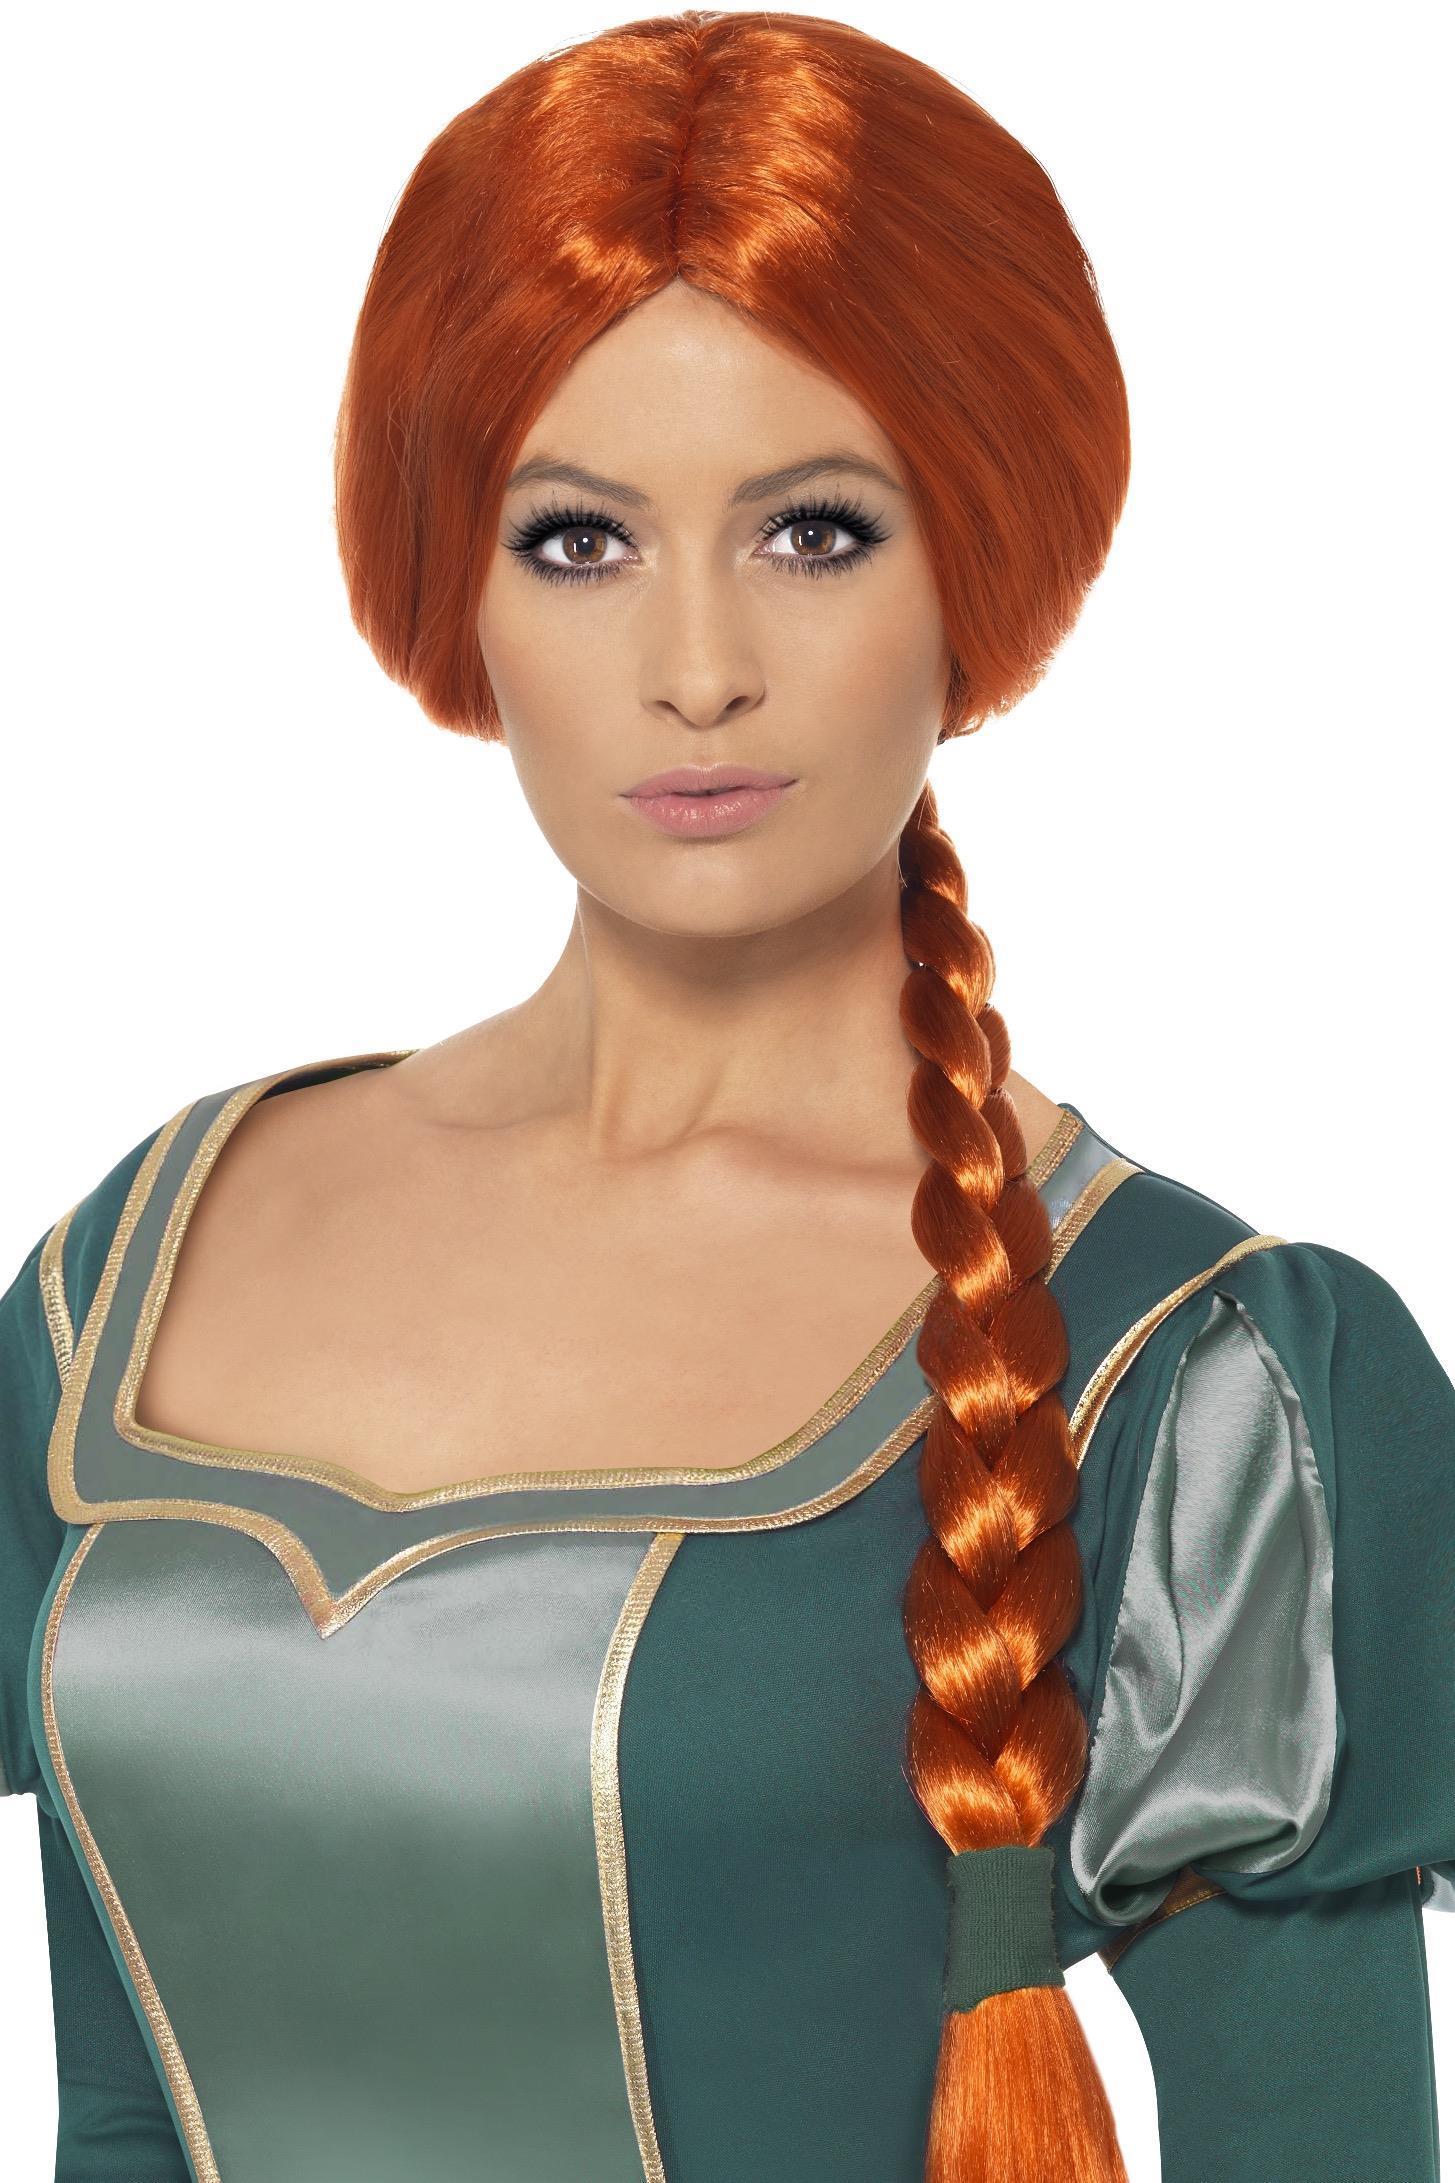 Shrek Princess Fiona Wig Auburn